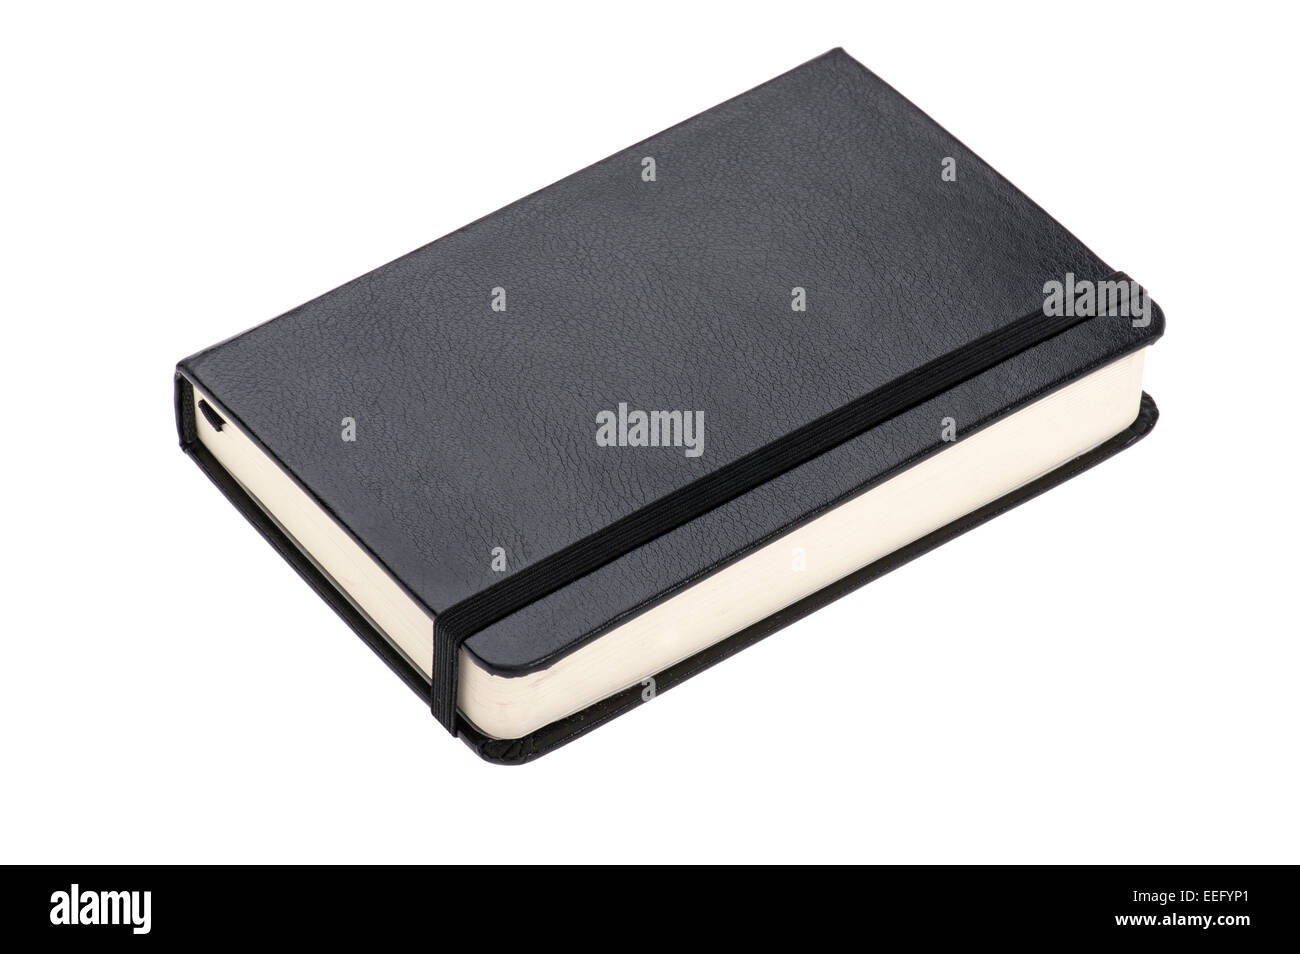 object isolated on white - new handbook Stock Photo